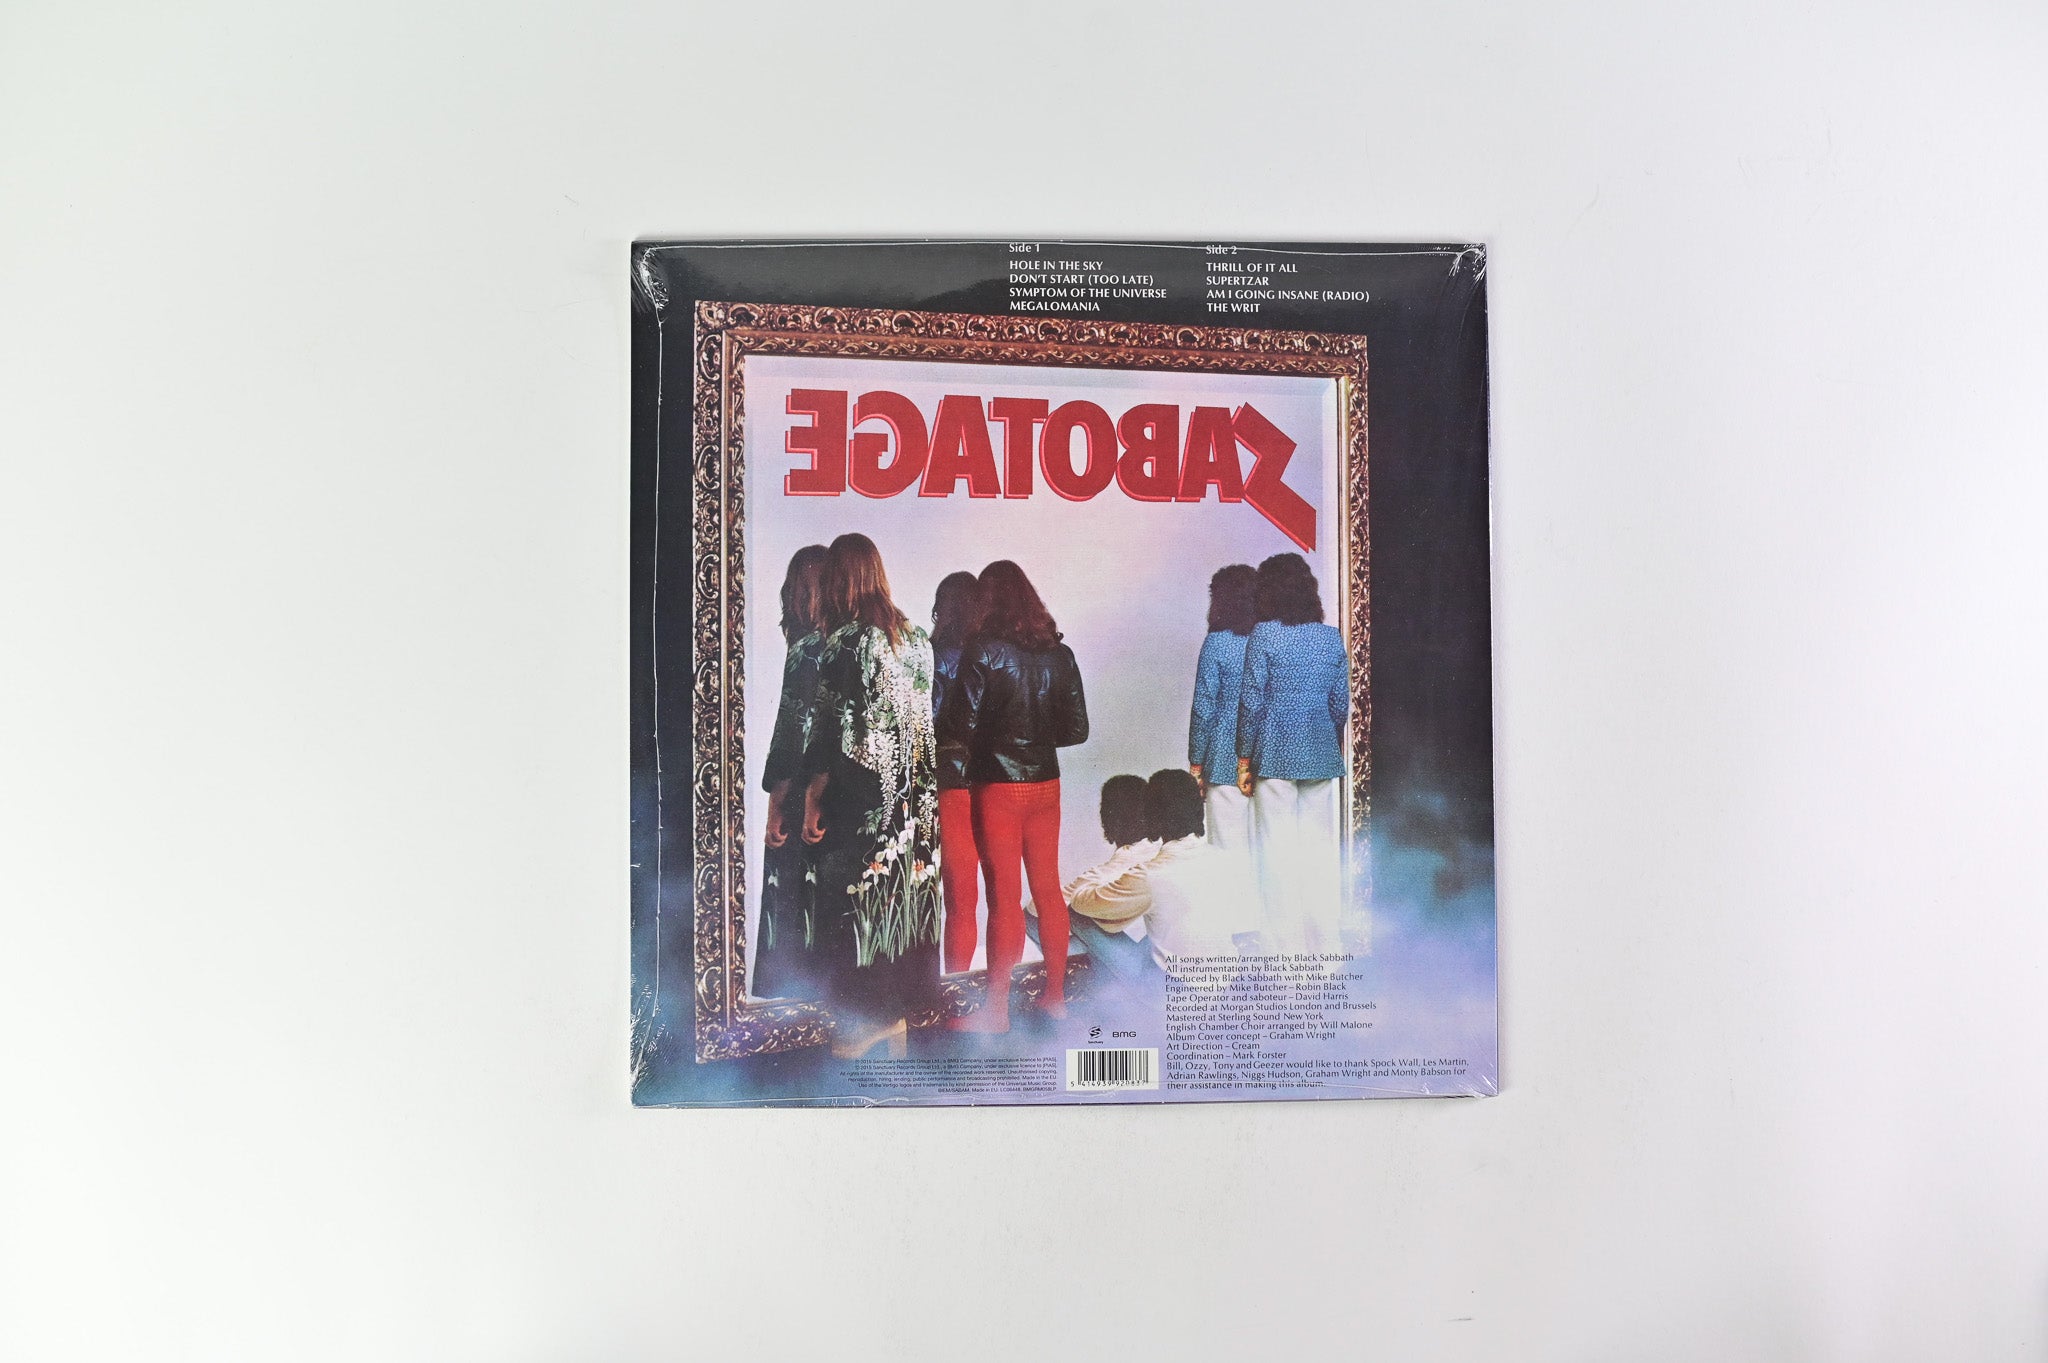 Black Sabbath - Sabotage on BMG / Sanctuary / Vertigo